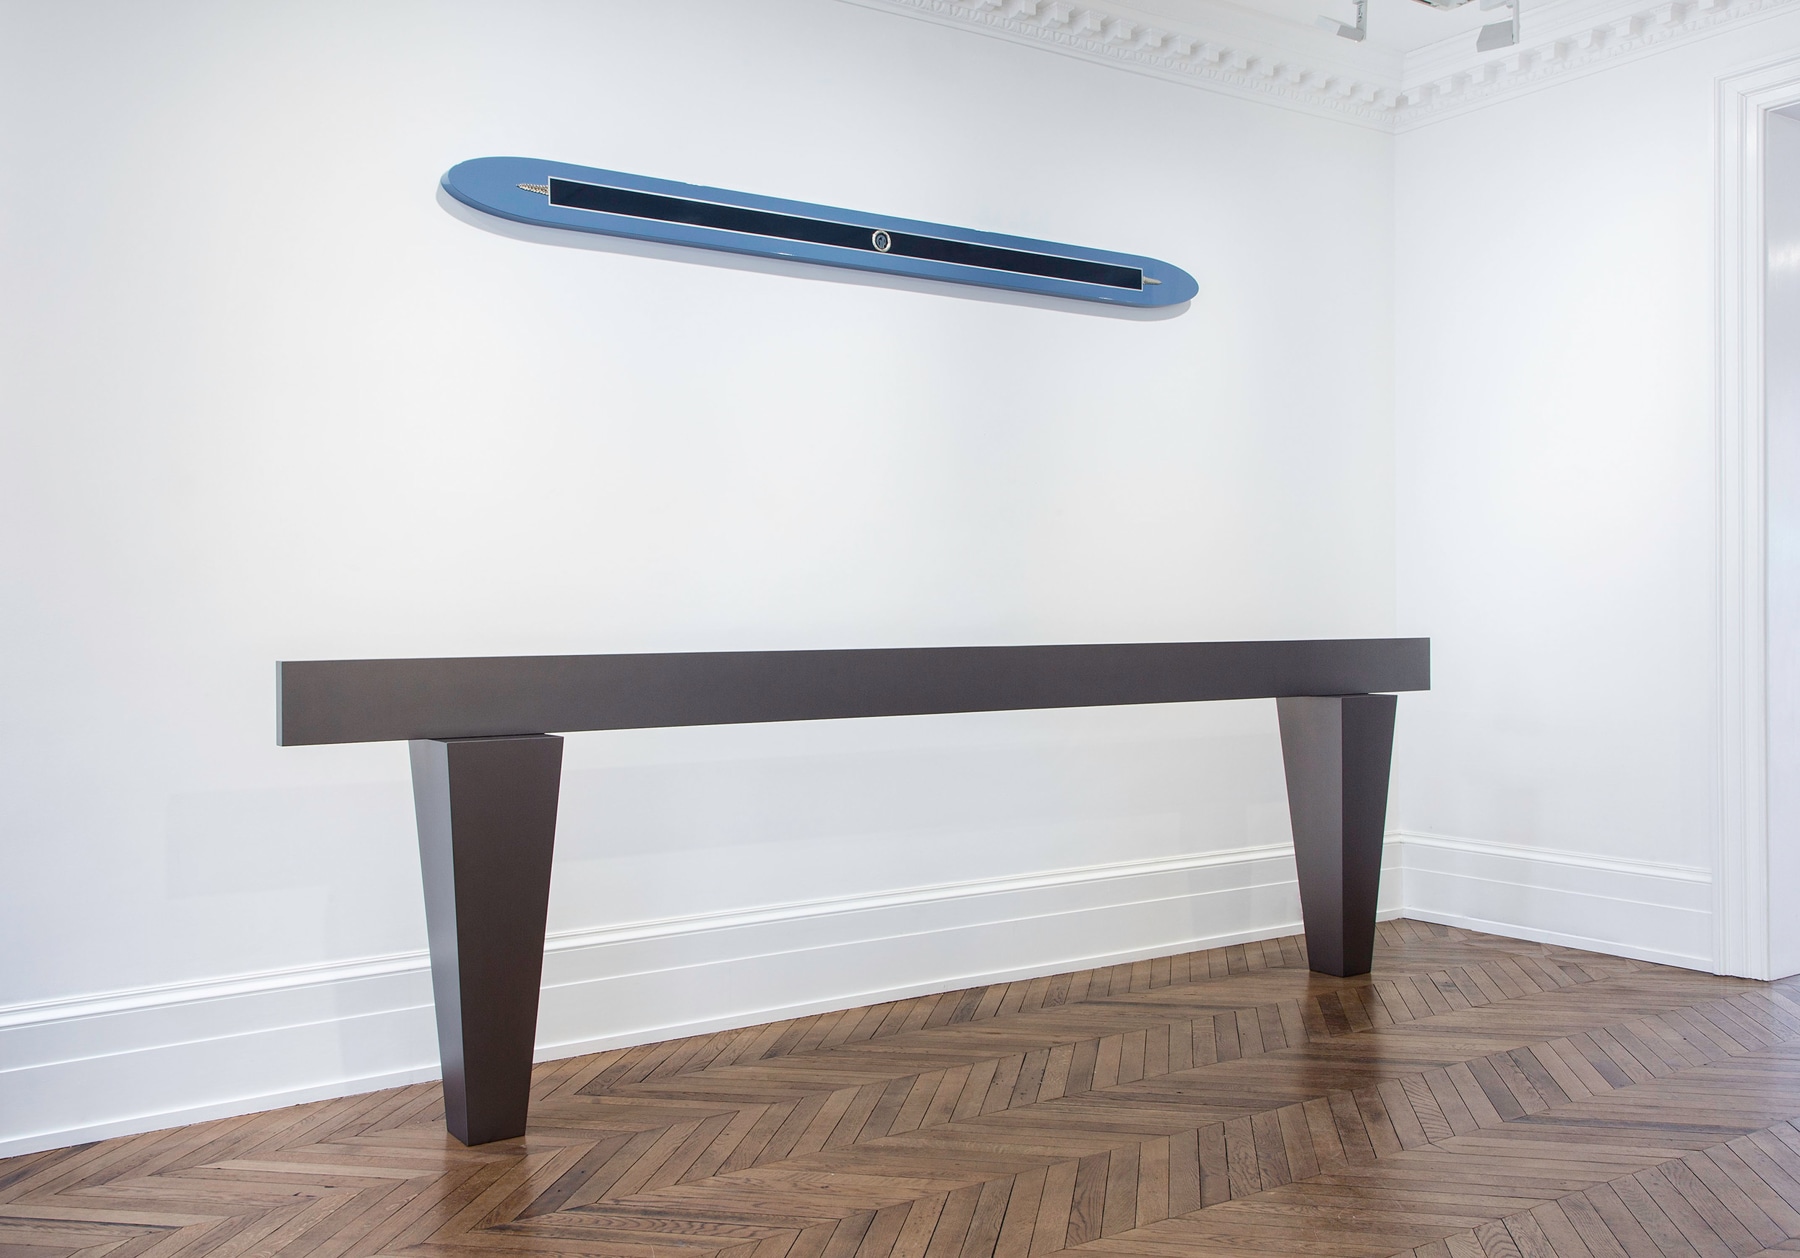 GIANNI PIACENTINO, WORKS 1965-2006, London, 2015, Installation Image 12